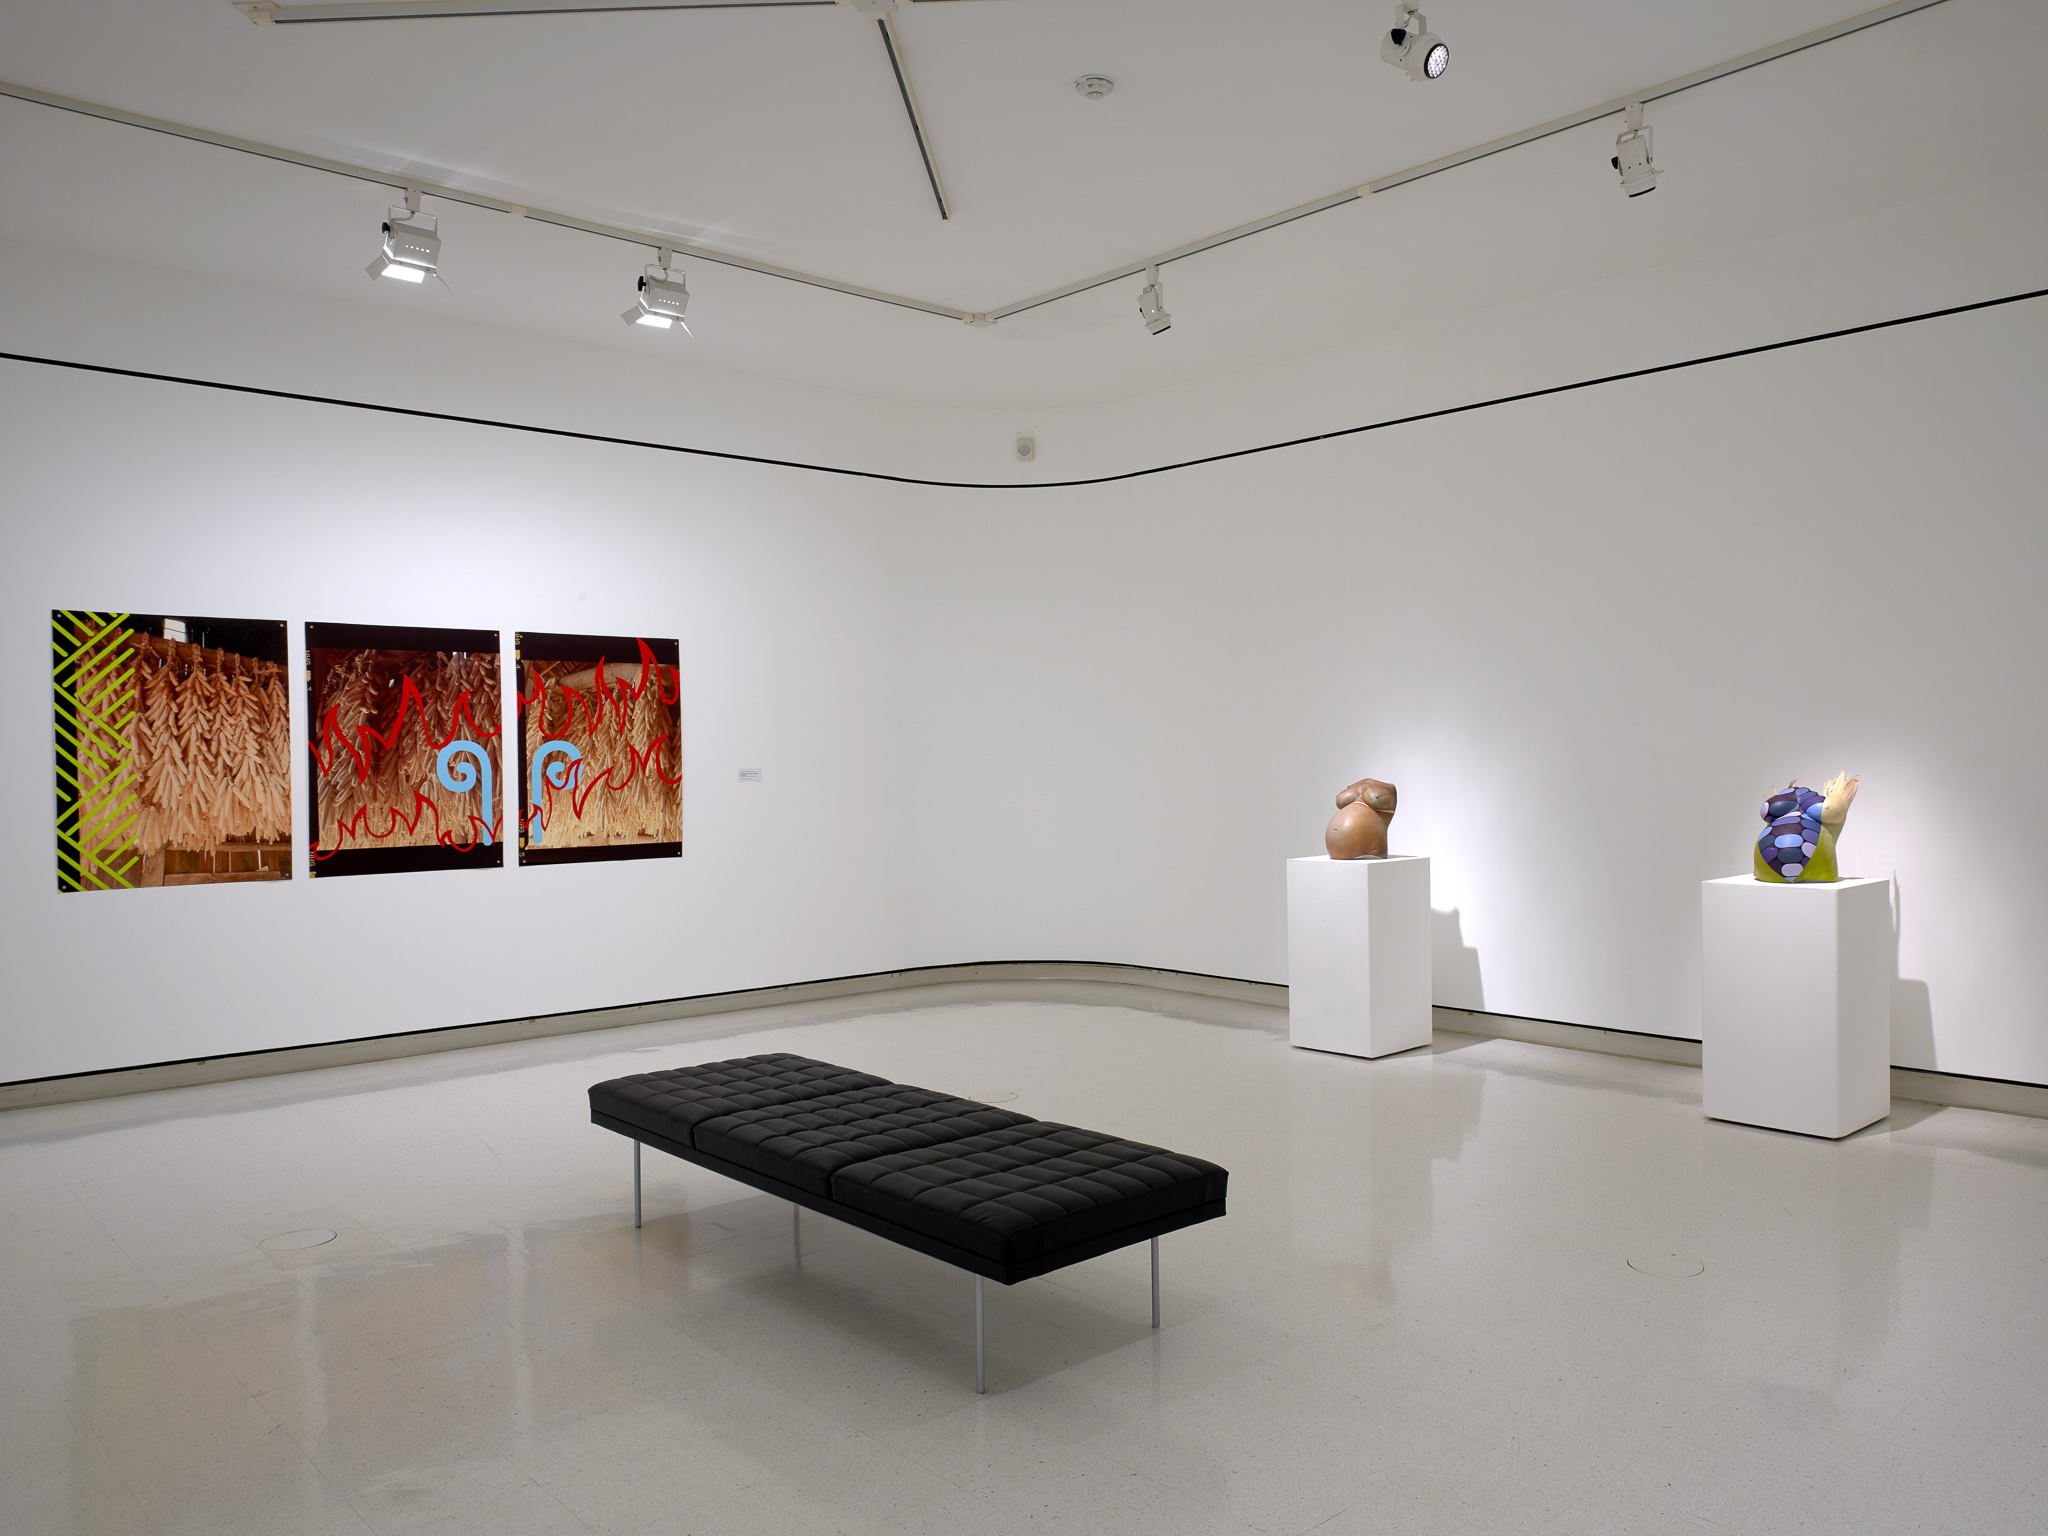 UB Art Gallery to exhibit Jones' work - UB Reporter